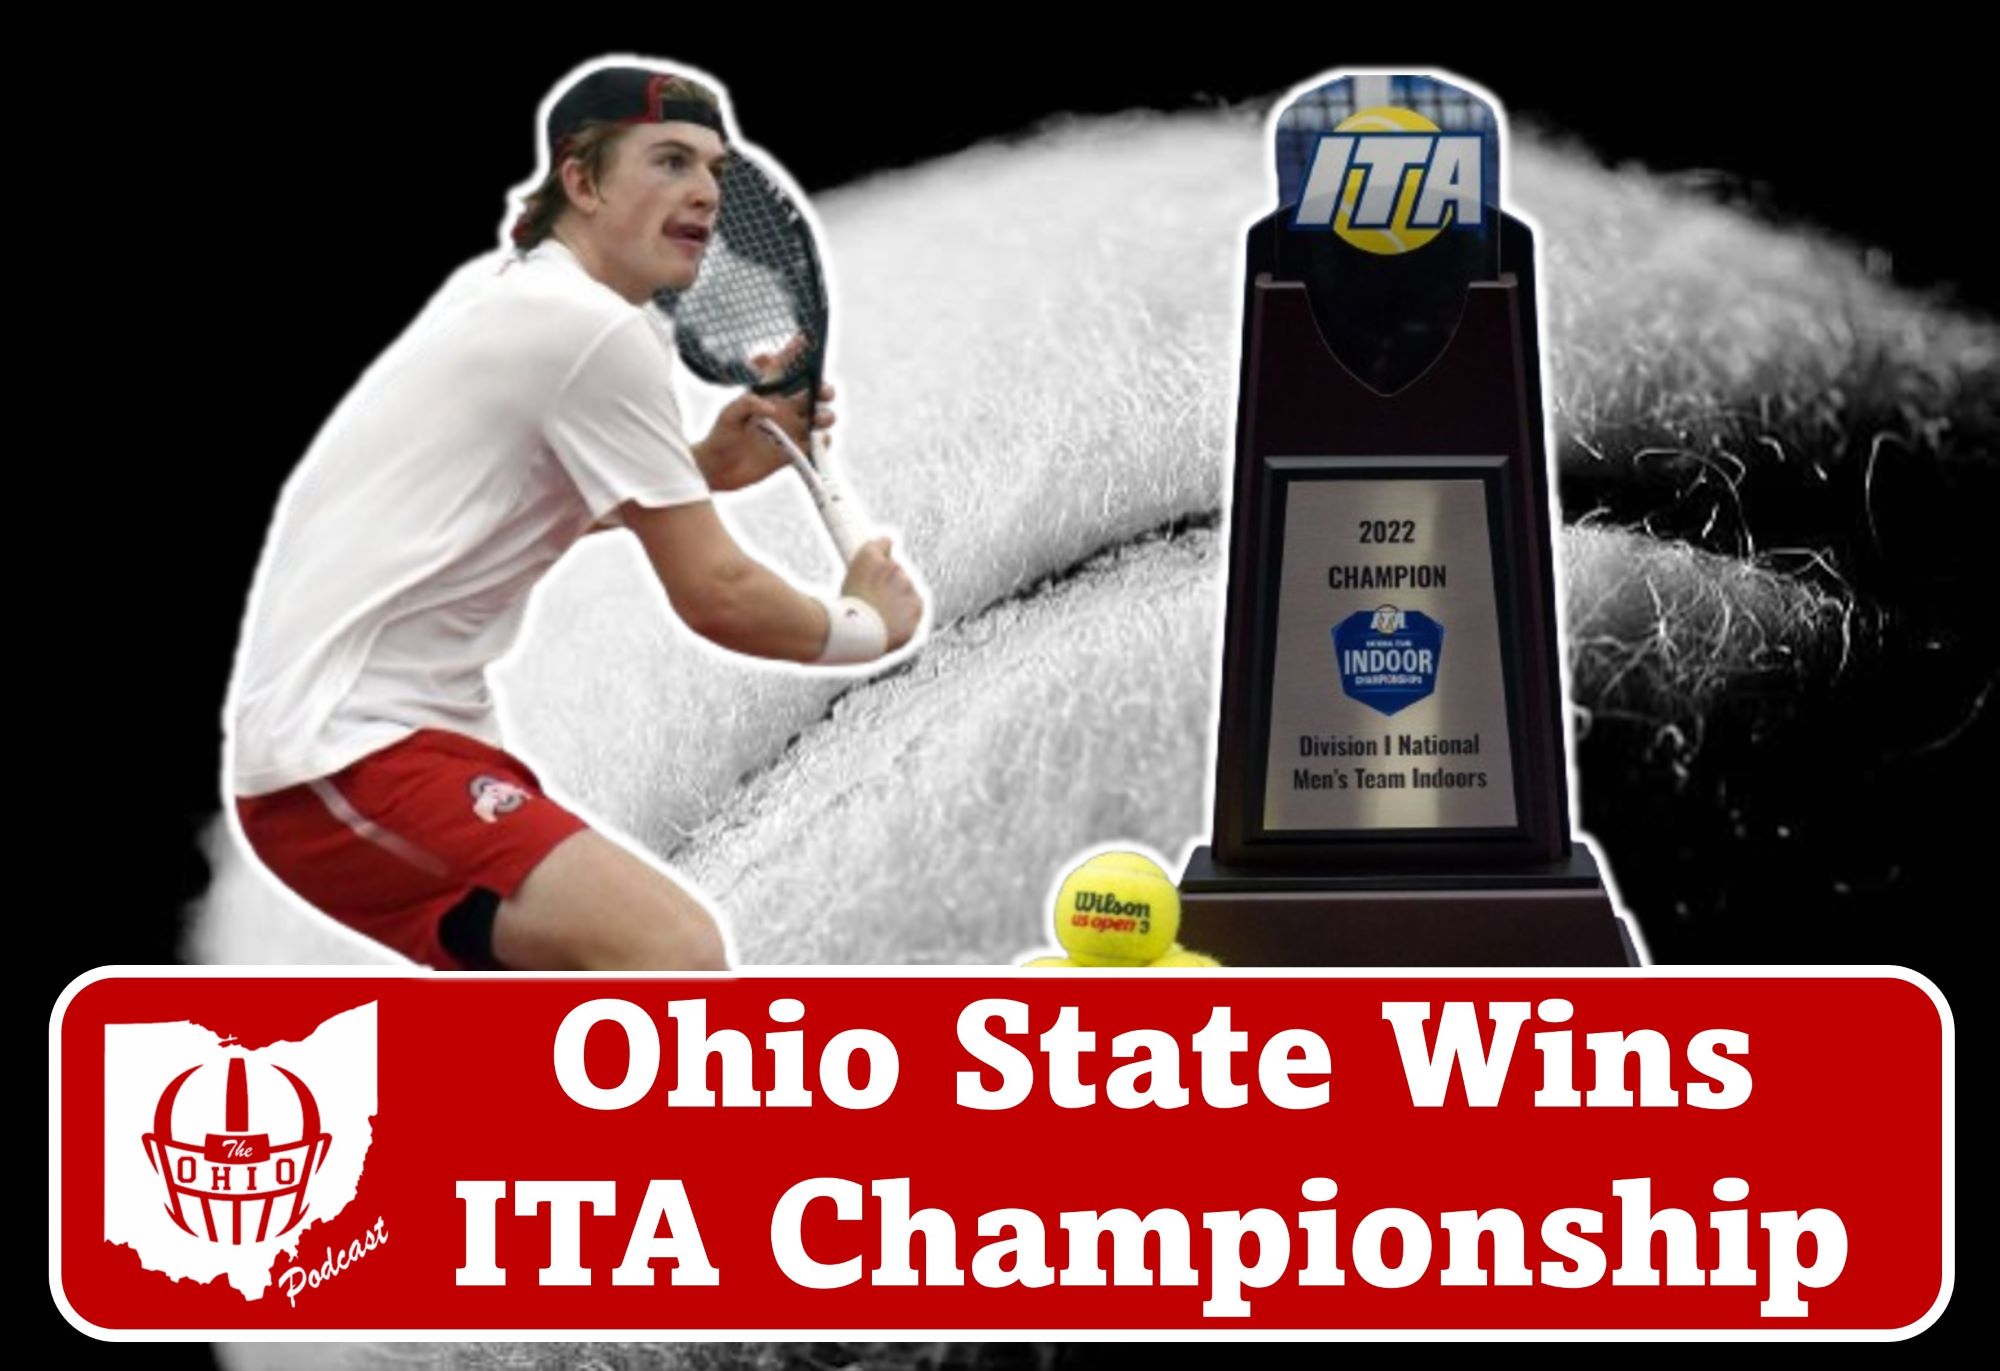 Ohio State Wins ITA Championship